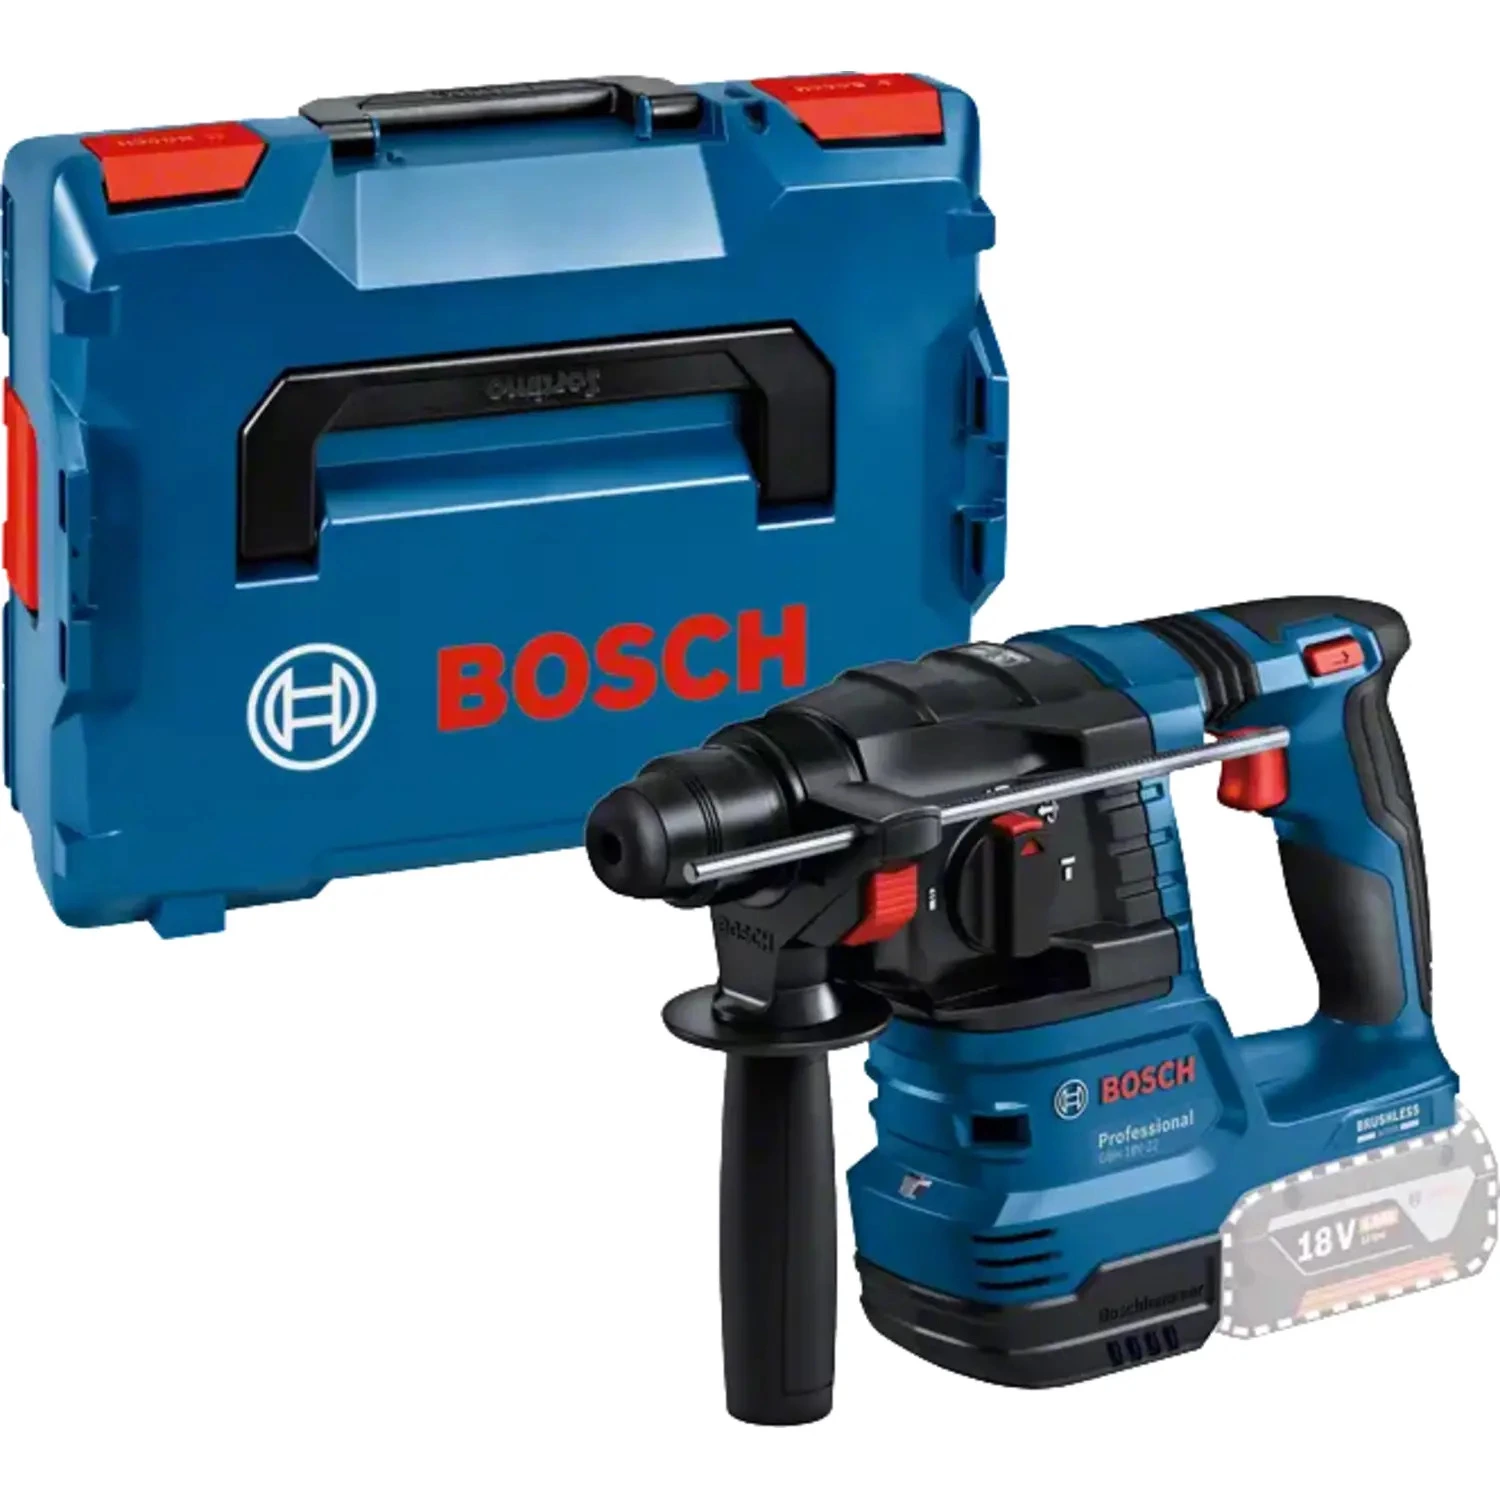 Bosch GBH 18V-22 18V accu boorhamer body in L-Boxx-image